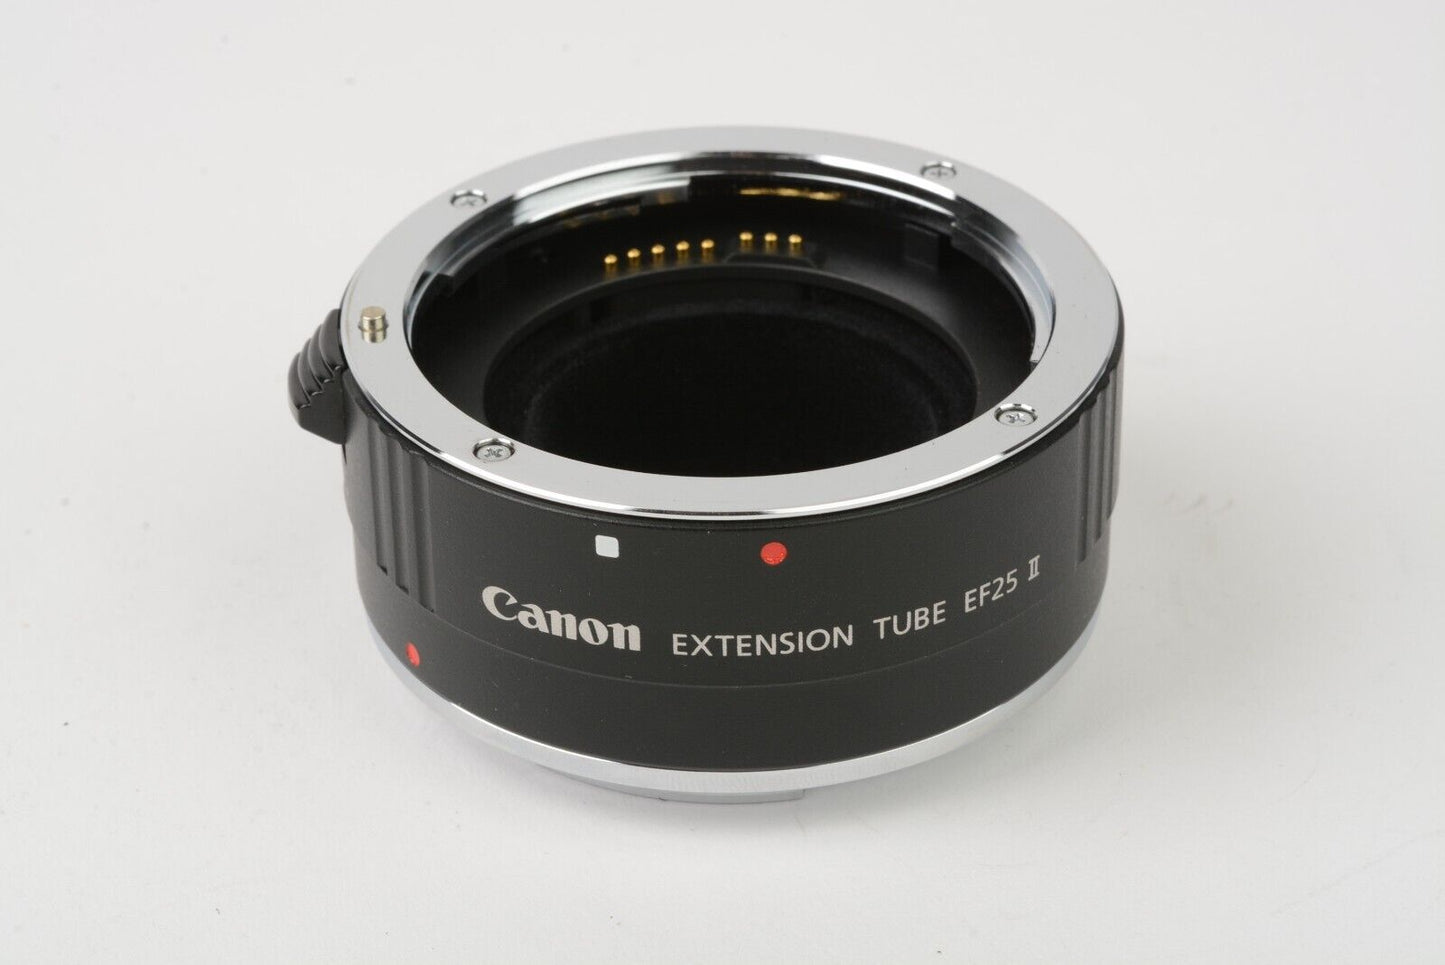 MINT CANON EF25 II EXTENSION TUBE SET w/CAPS